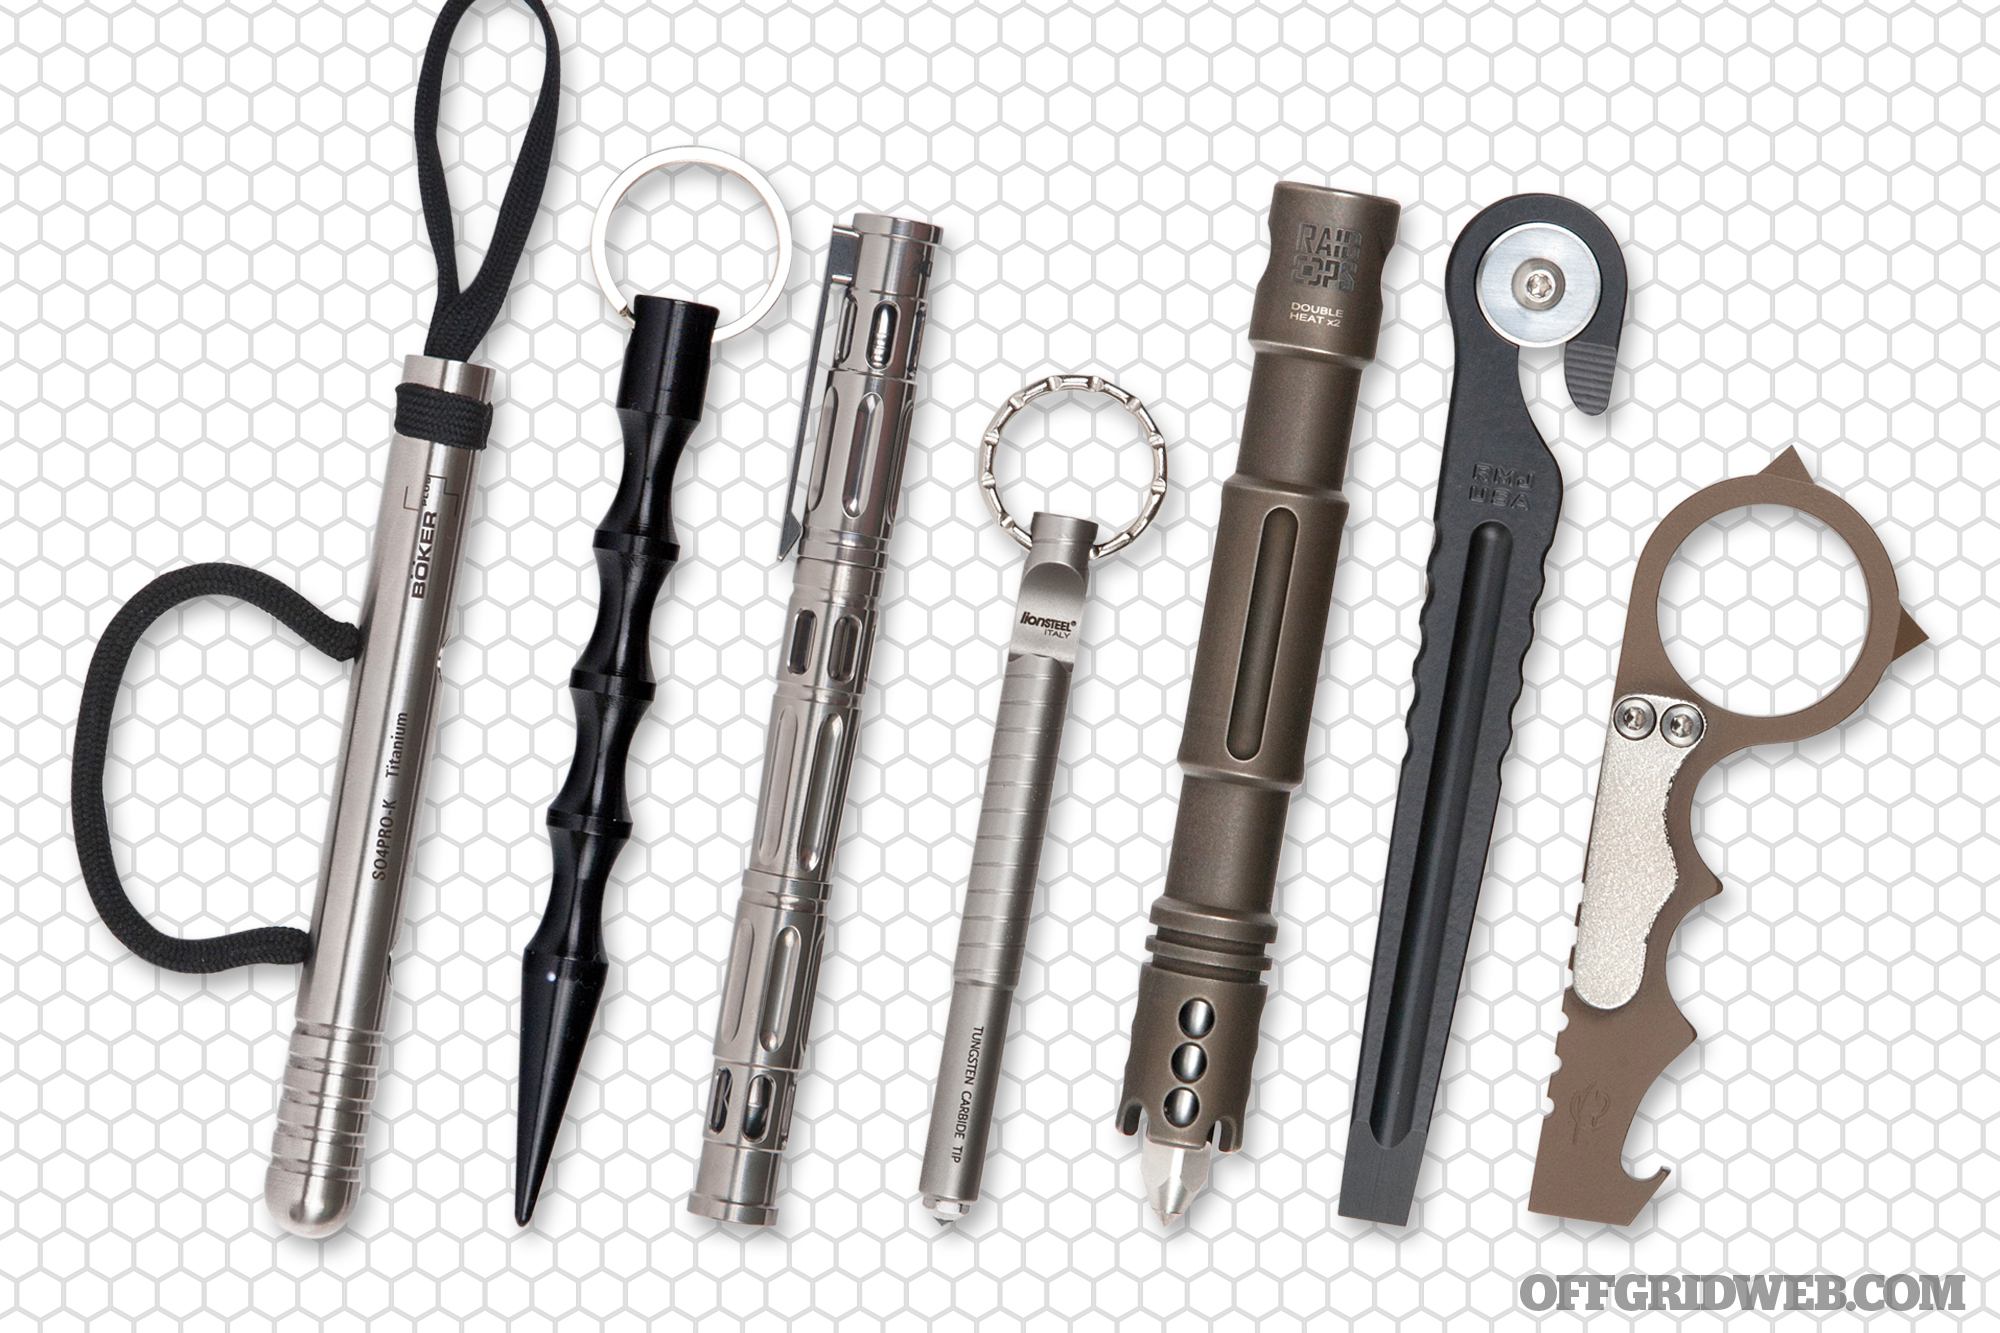 Weapon Self-defense Alloy Pen-shaped Kubaton Keychain Personal safty Tool Kit 